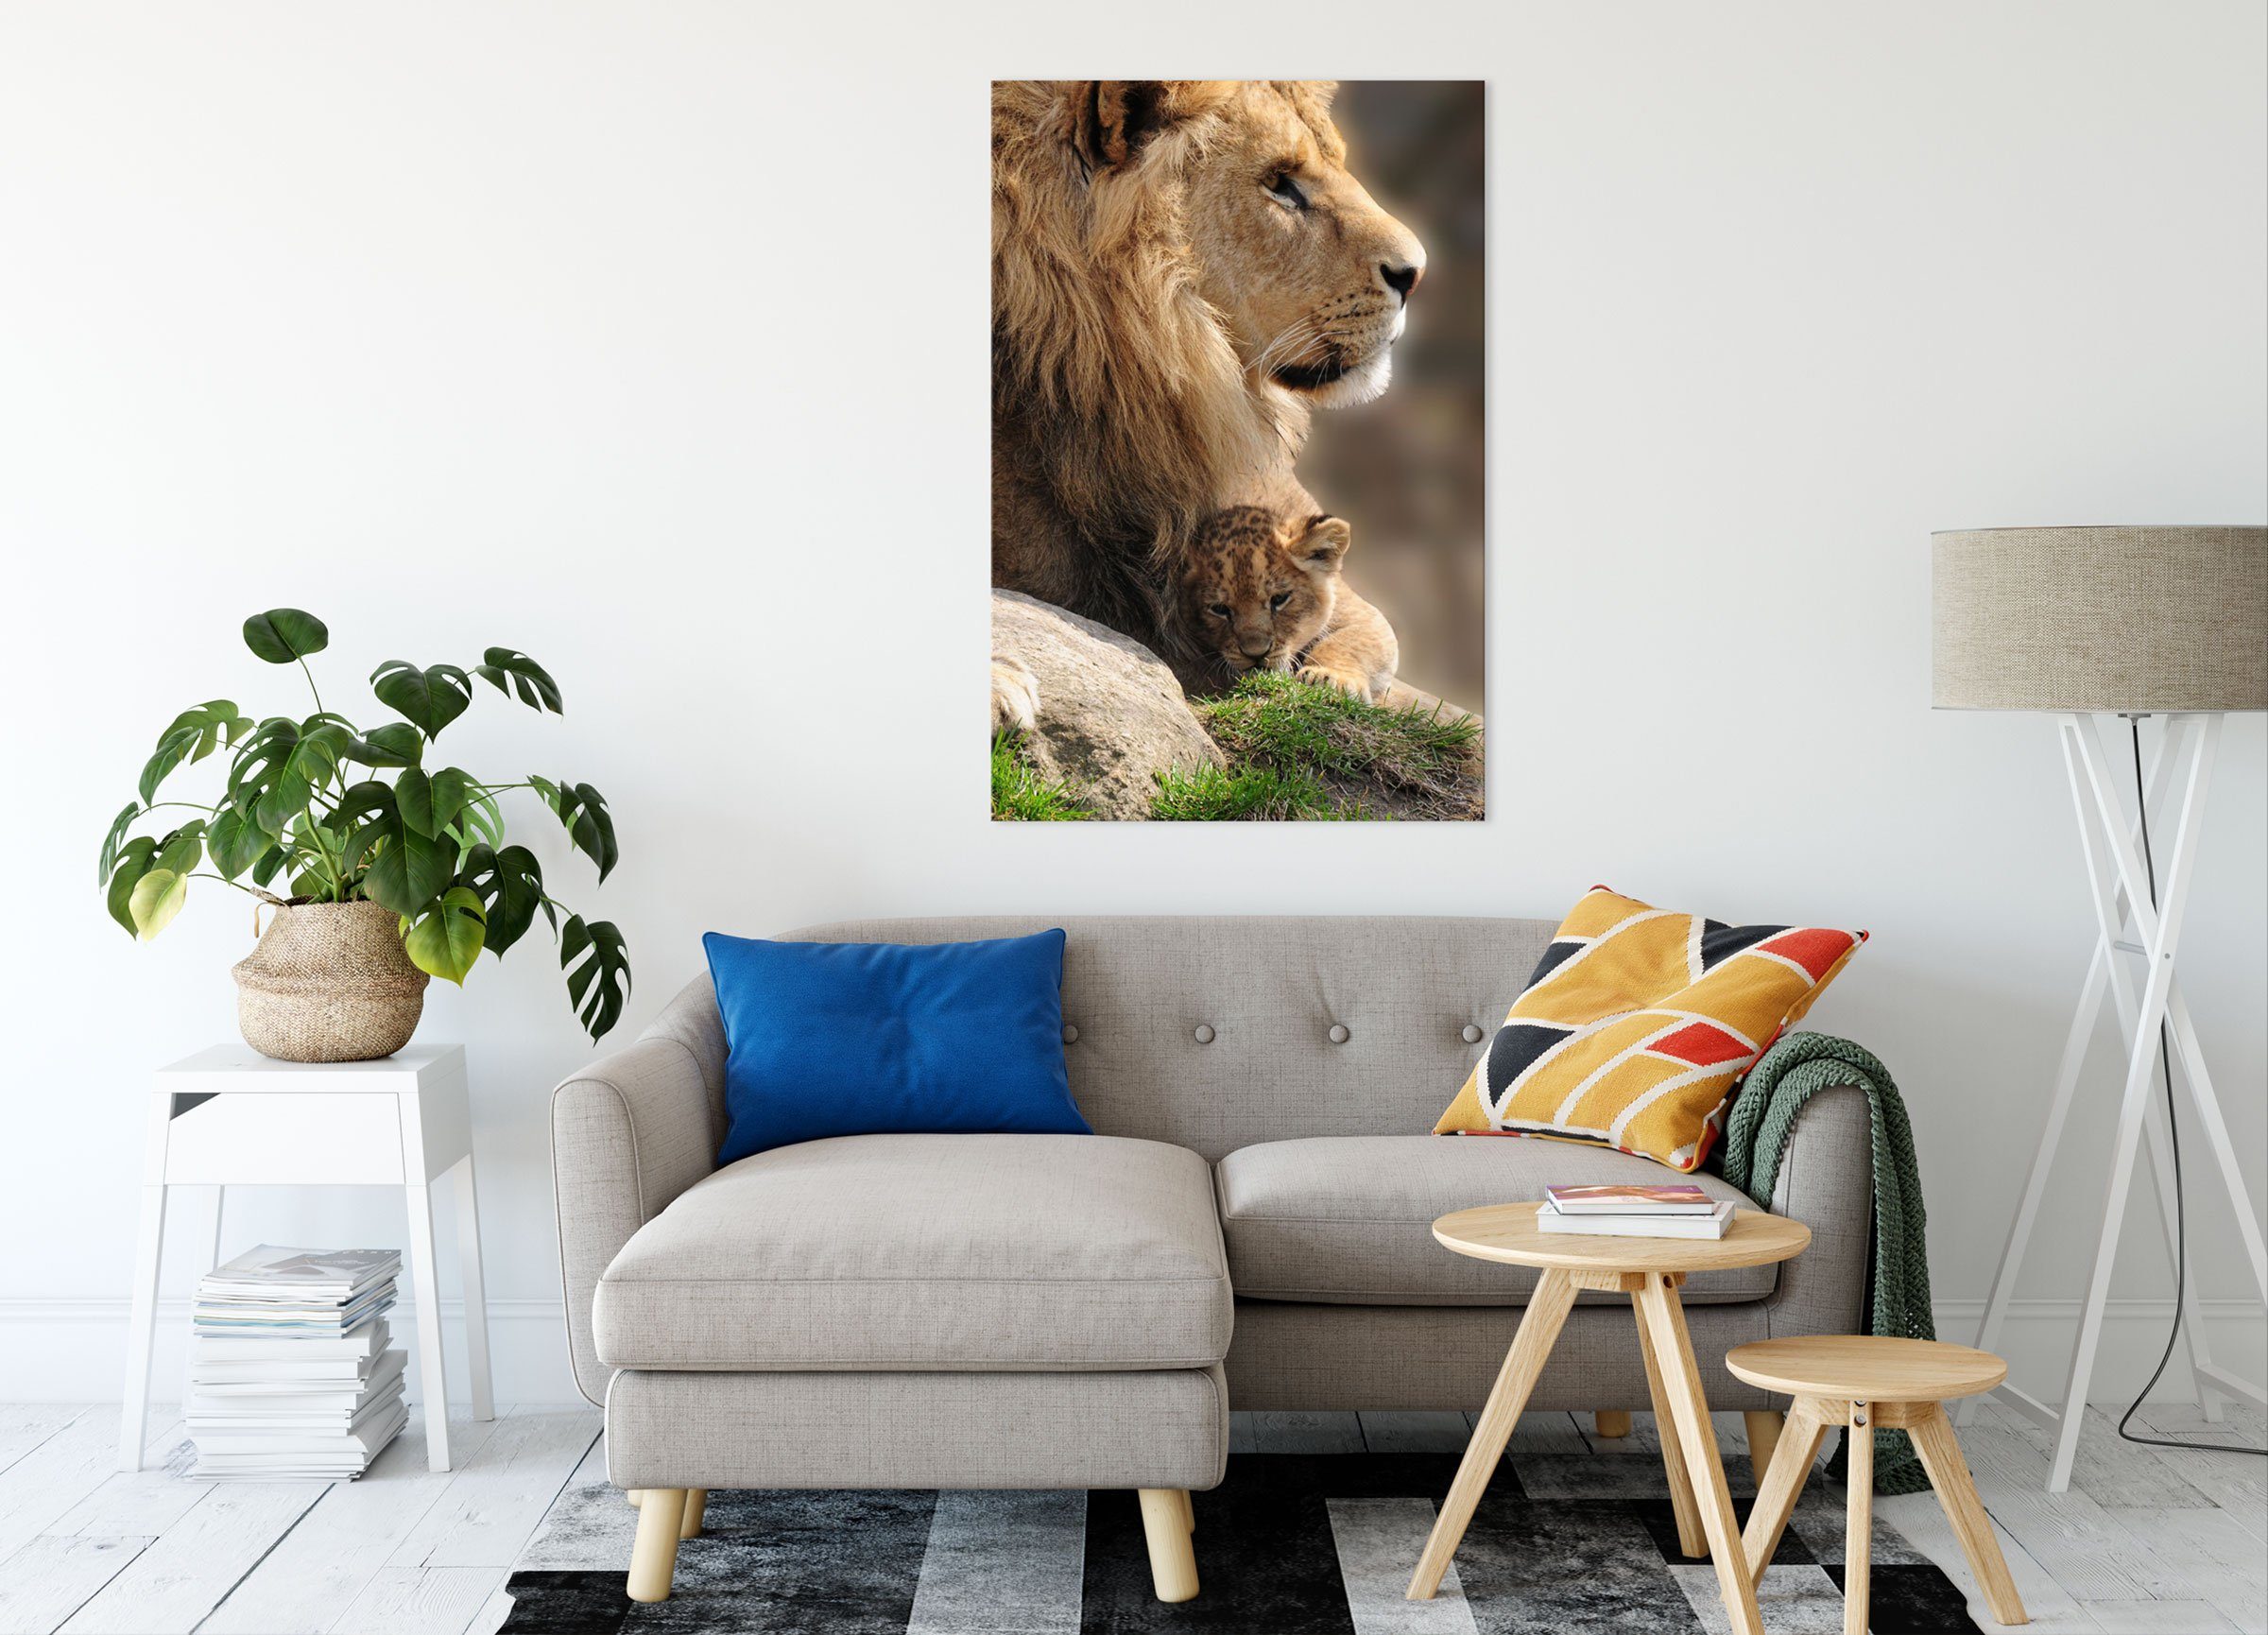 Pixxprint Leinwandbild Leinwandbild inkl. mit Löwenbaby, fertig Löwenbaby St), mit Zackenaufhänger Löwe (1 Löwe bespannt